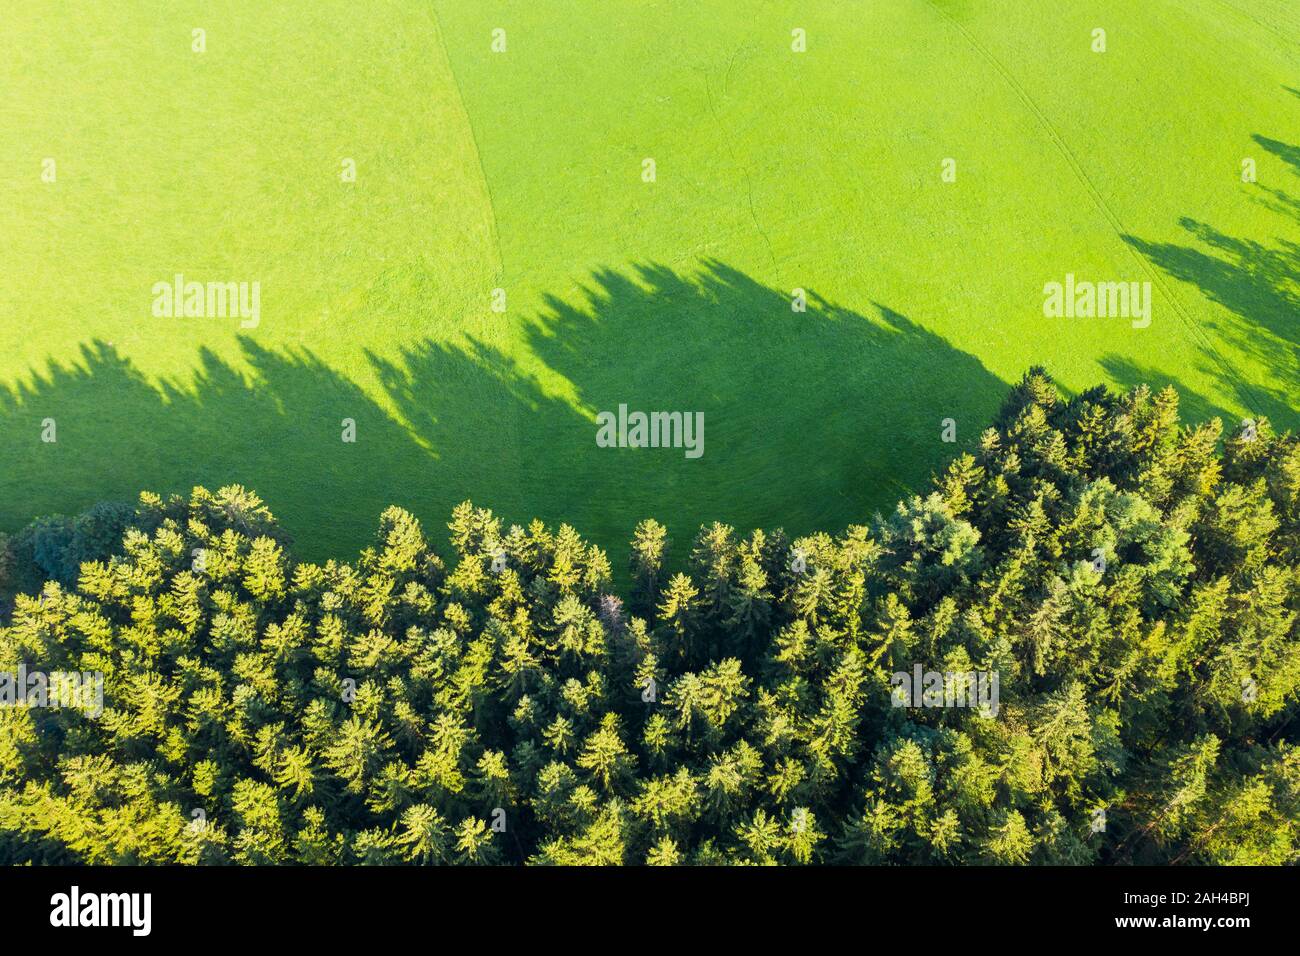 In Germania, in Baviera, Eurasburg, vista aerea del bordo del verde bosco di abete rosso Foto Stock